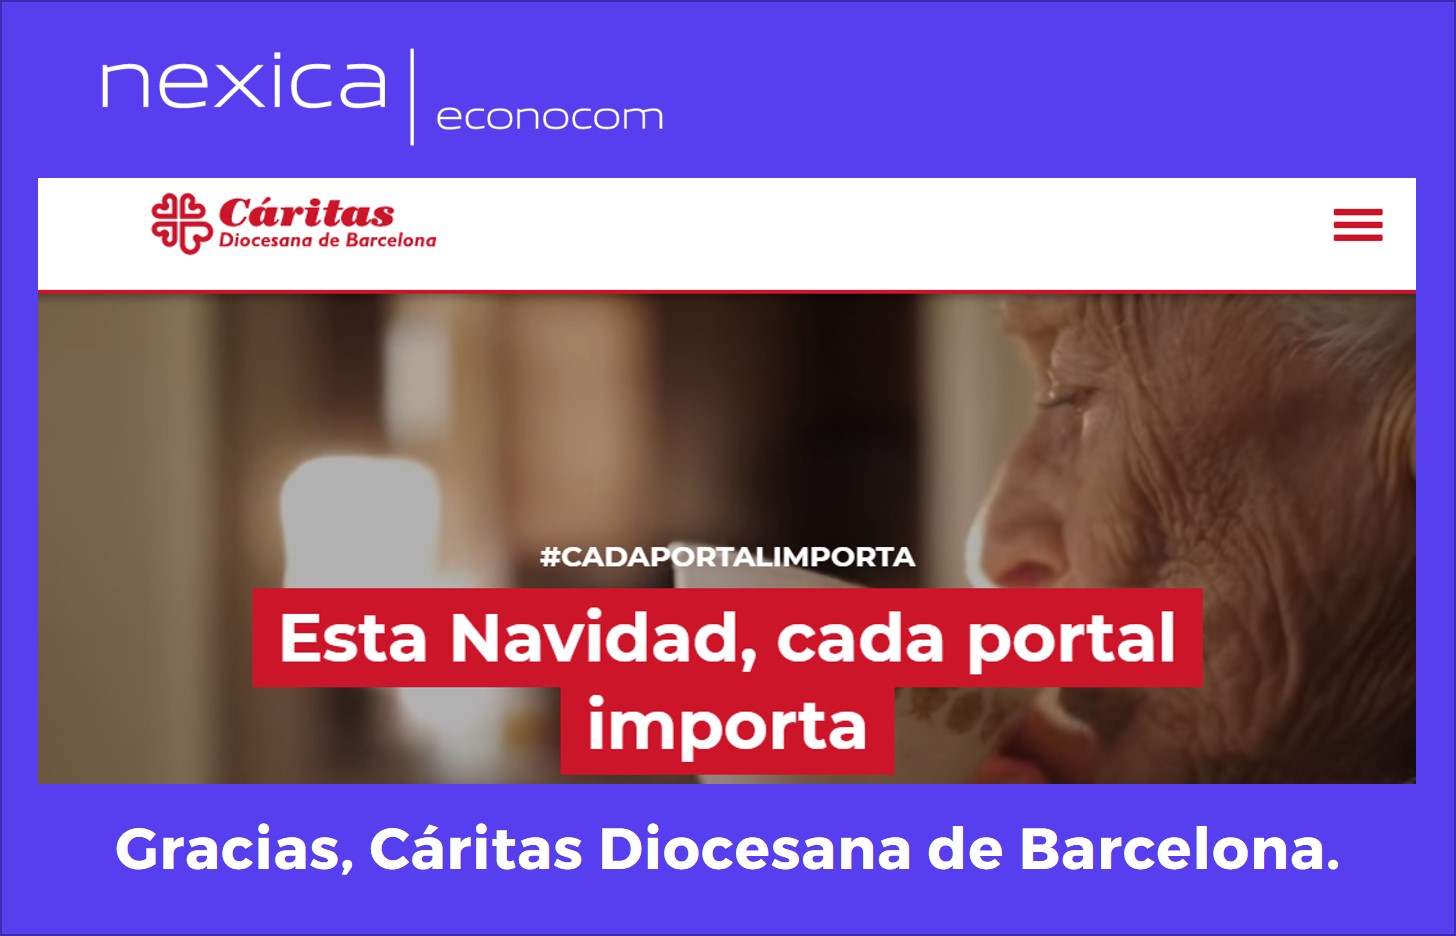 Econocom Nexica col·labora amb Càritas Barcelona